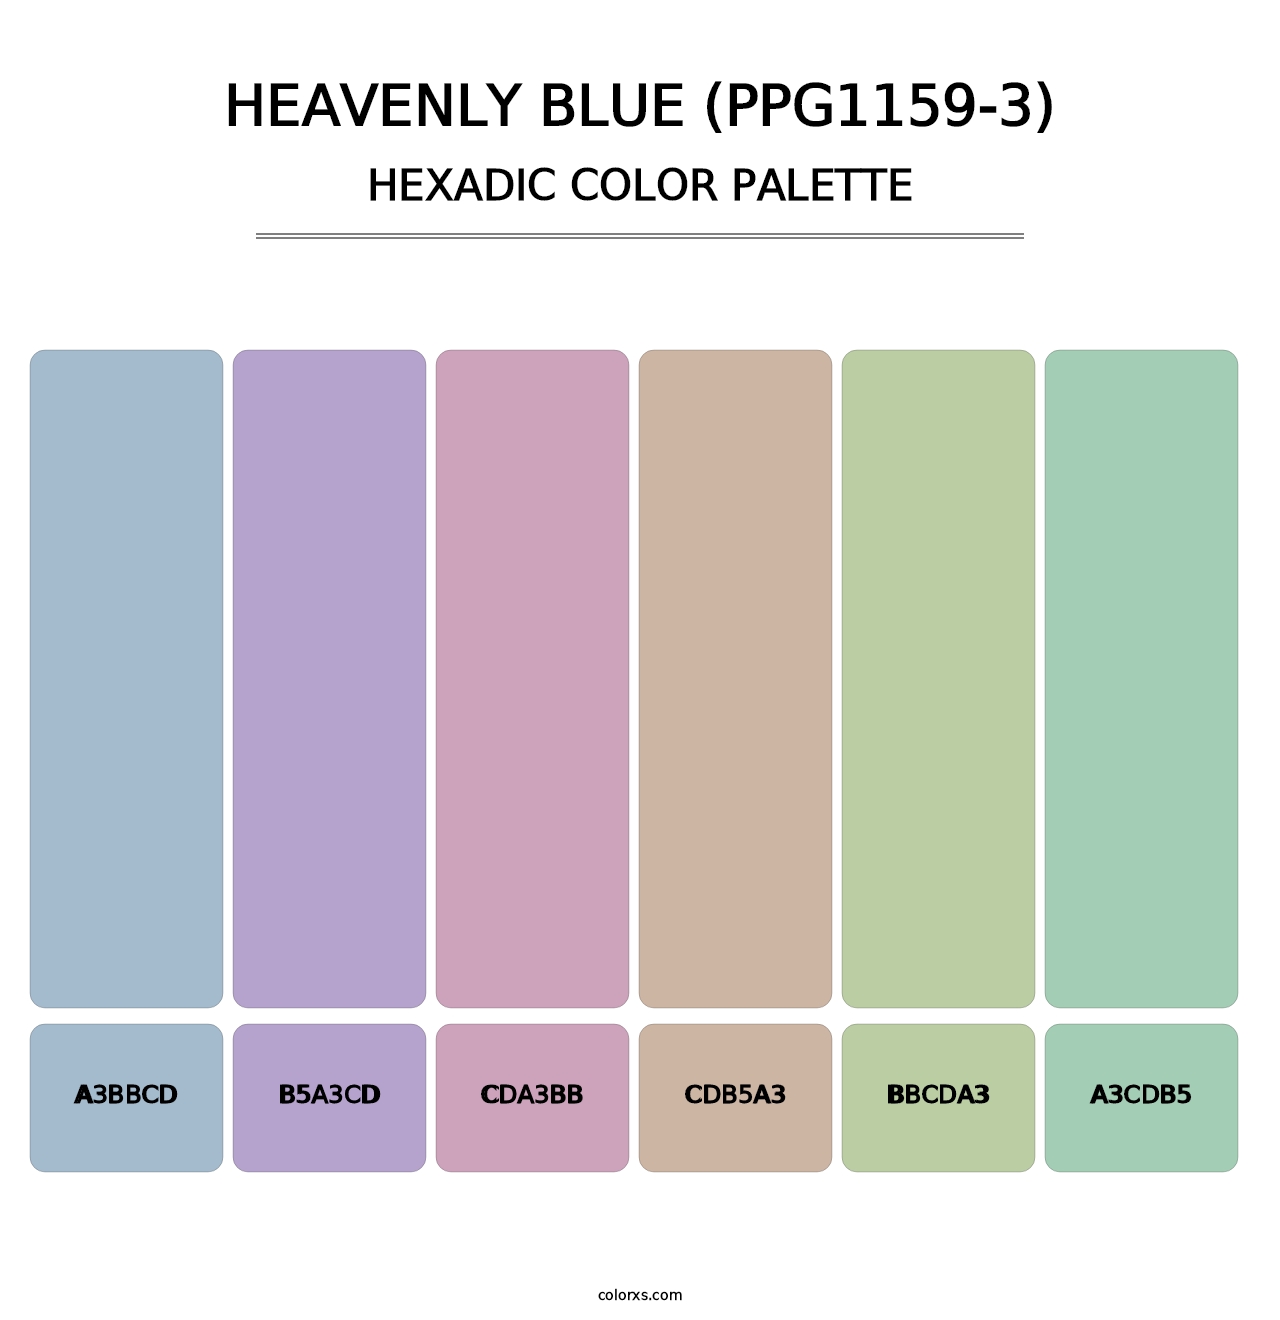 Heavenly Blue (PPG1159-3) - Hexadic Color Palette